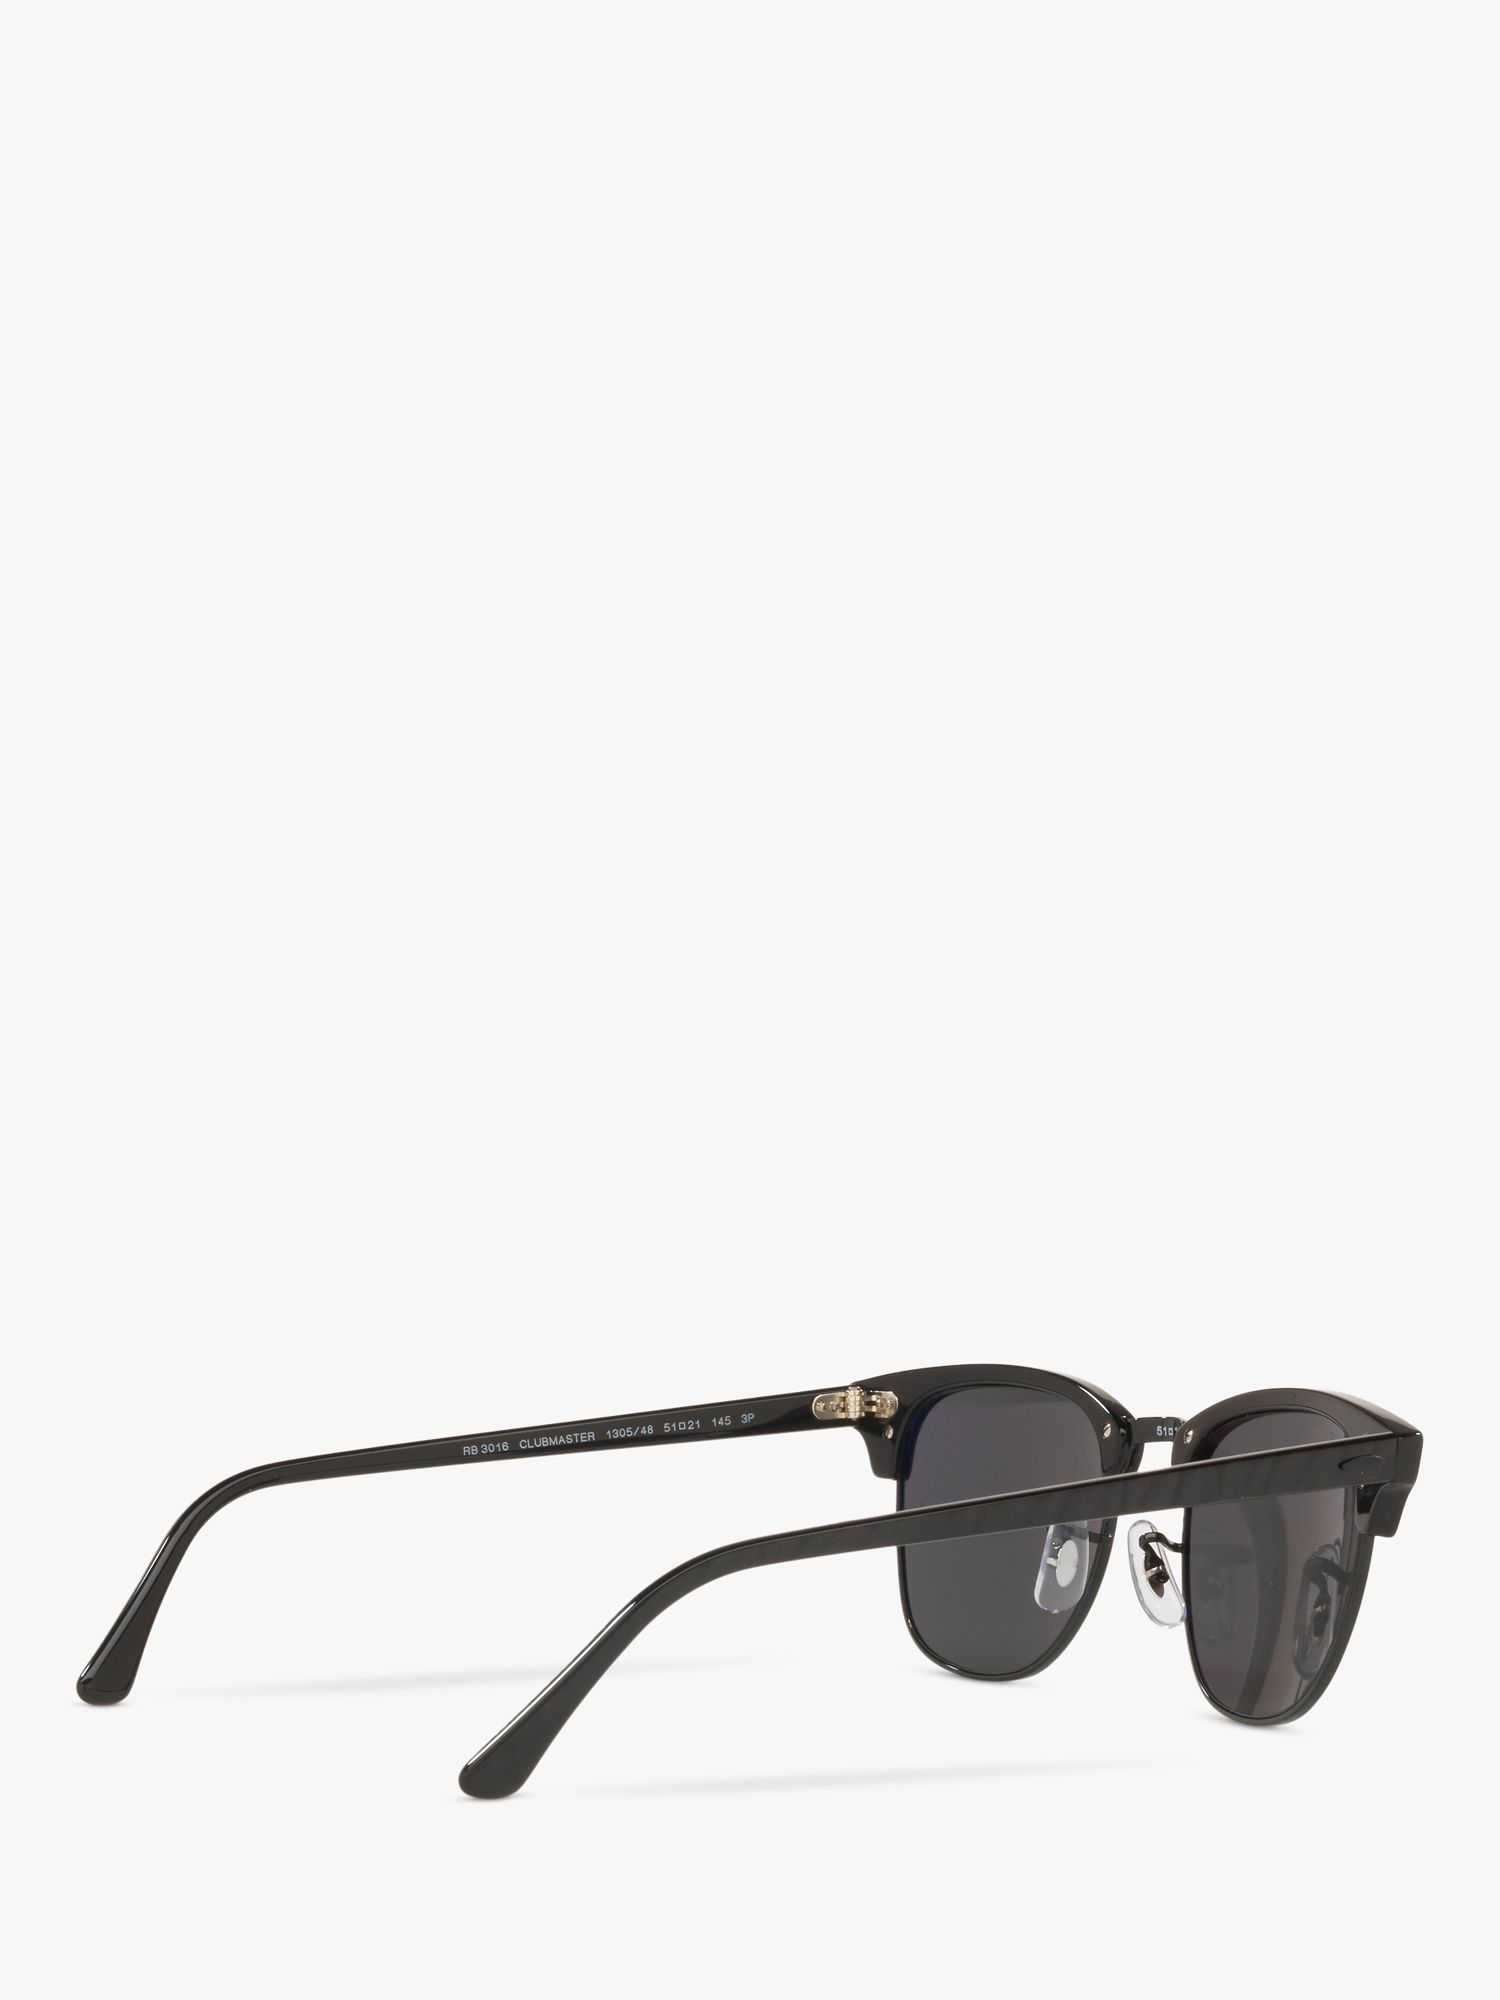 Ray-Ban RB3016 Unisex Polarised Clubmaster Sunglasses, Black/Grey at ...